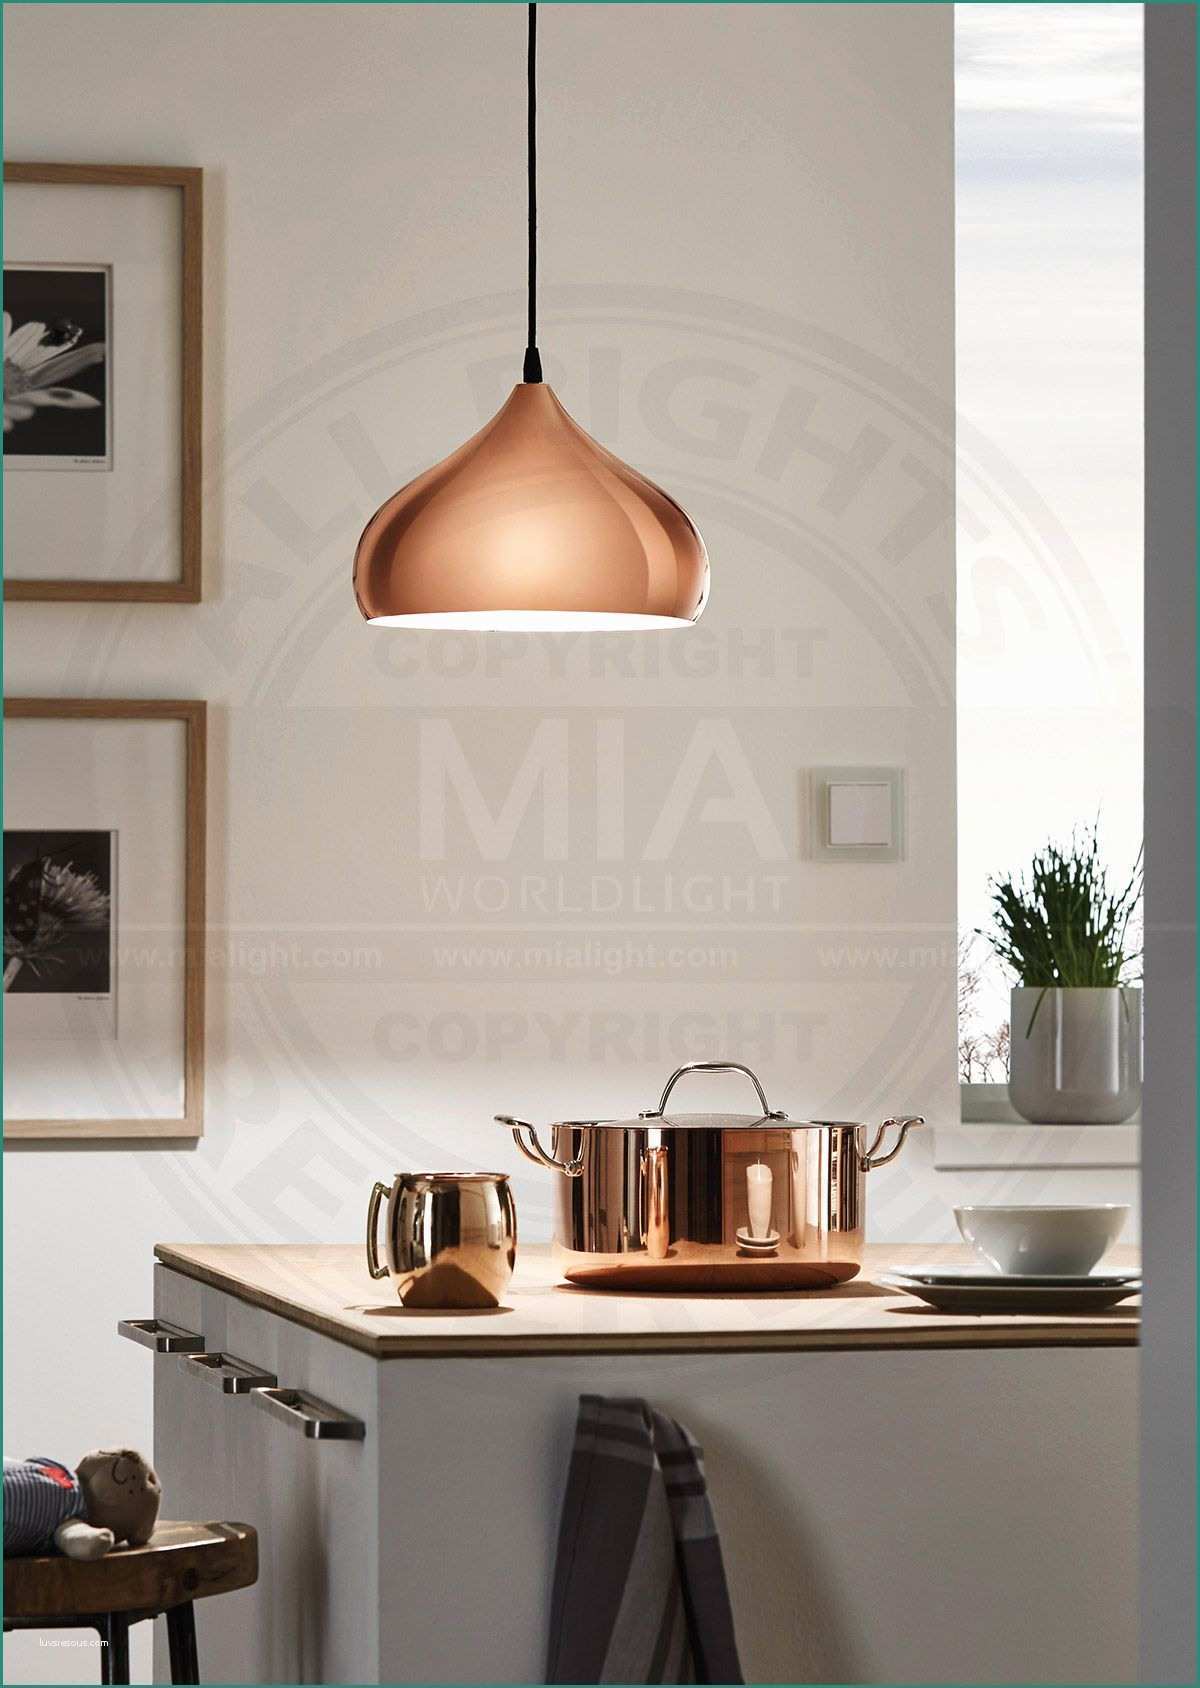 Lampade Design Outlet E Mia Light Miaworldlight On Pinterest